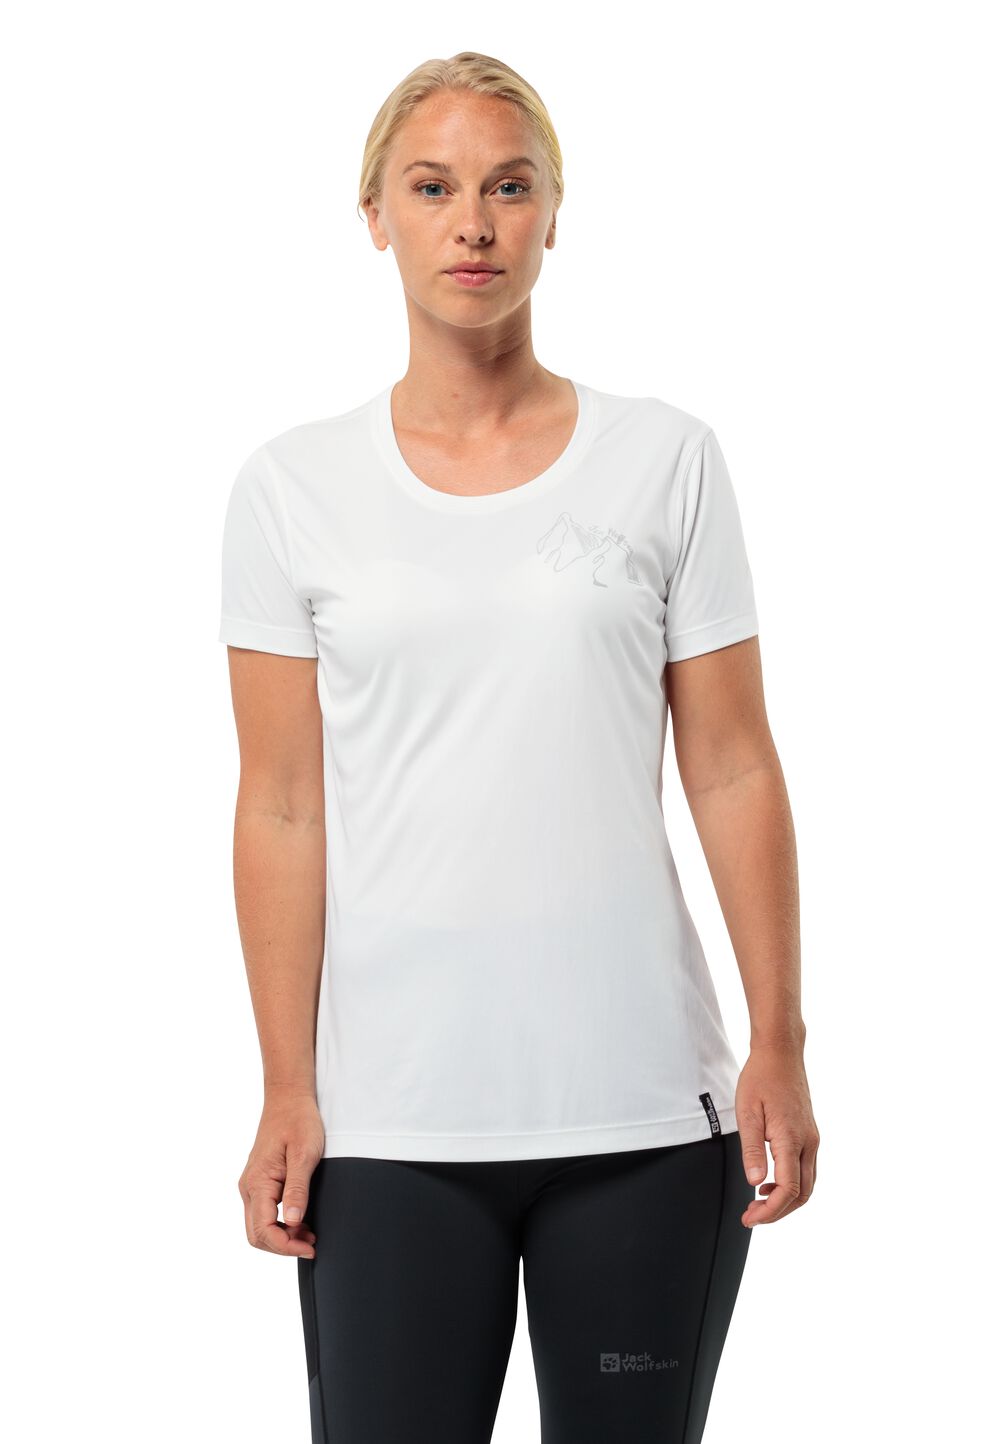 Jack Wolfskin Peak Graphic T-Shirt Women Functioneel shirt Dames L wit stark white